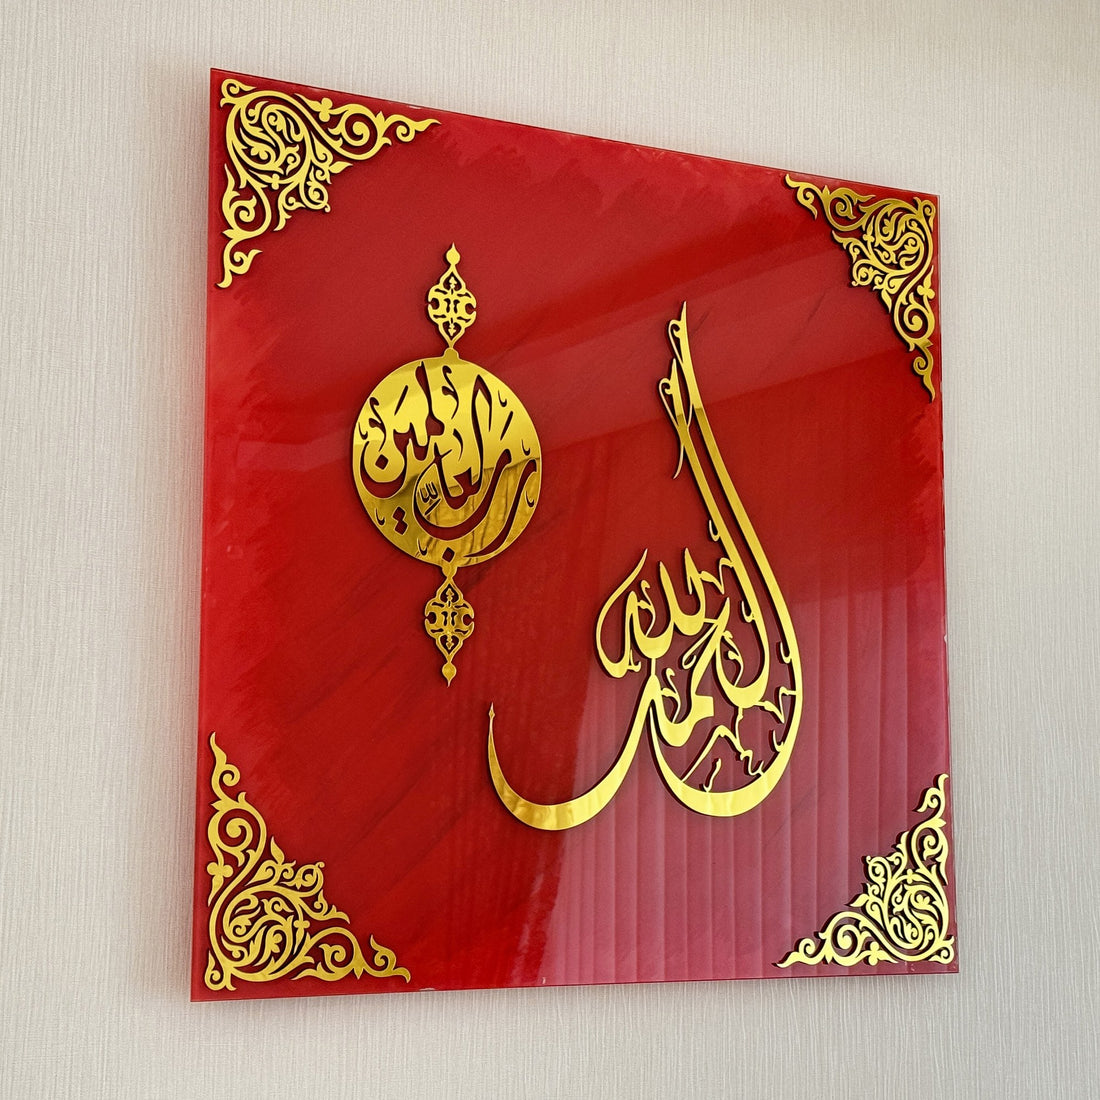 islamic-glass-surah-al-fatiha-verse-1-glass-islamic-wall-art-islamic-calligraphy-traditional-islamic-artwork-shukranislamicarts